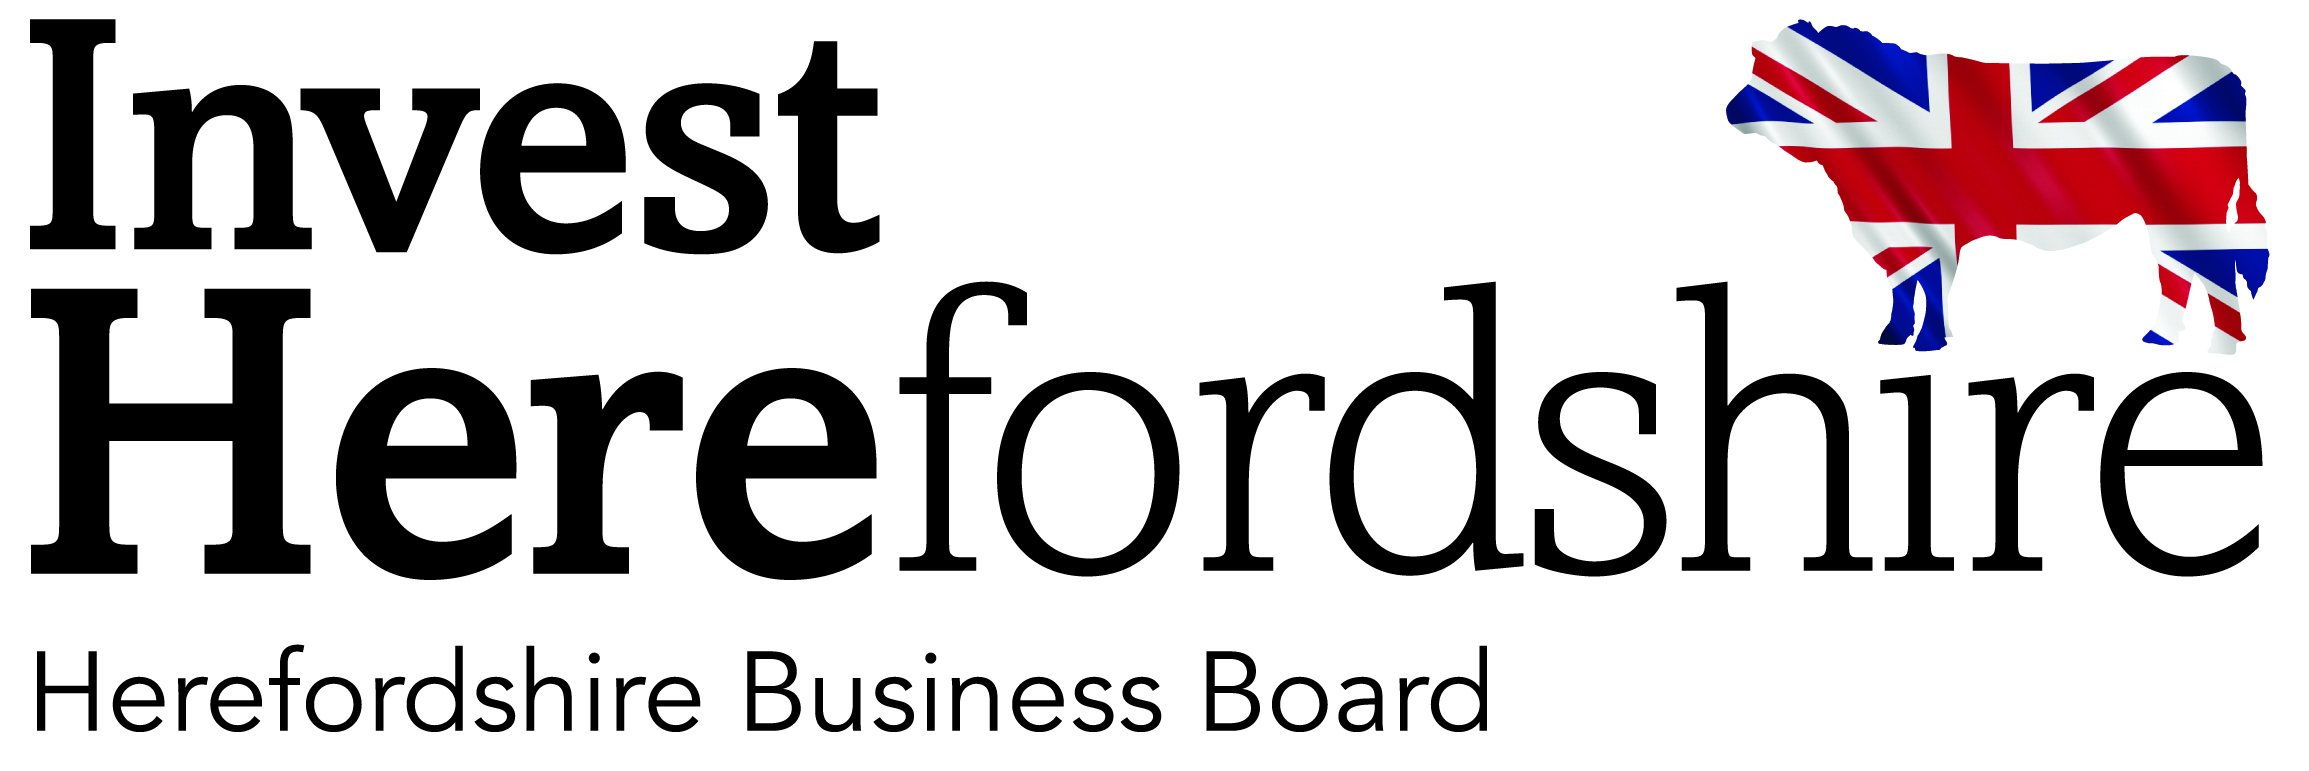 Hereford Business Board logo